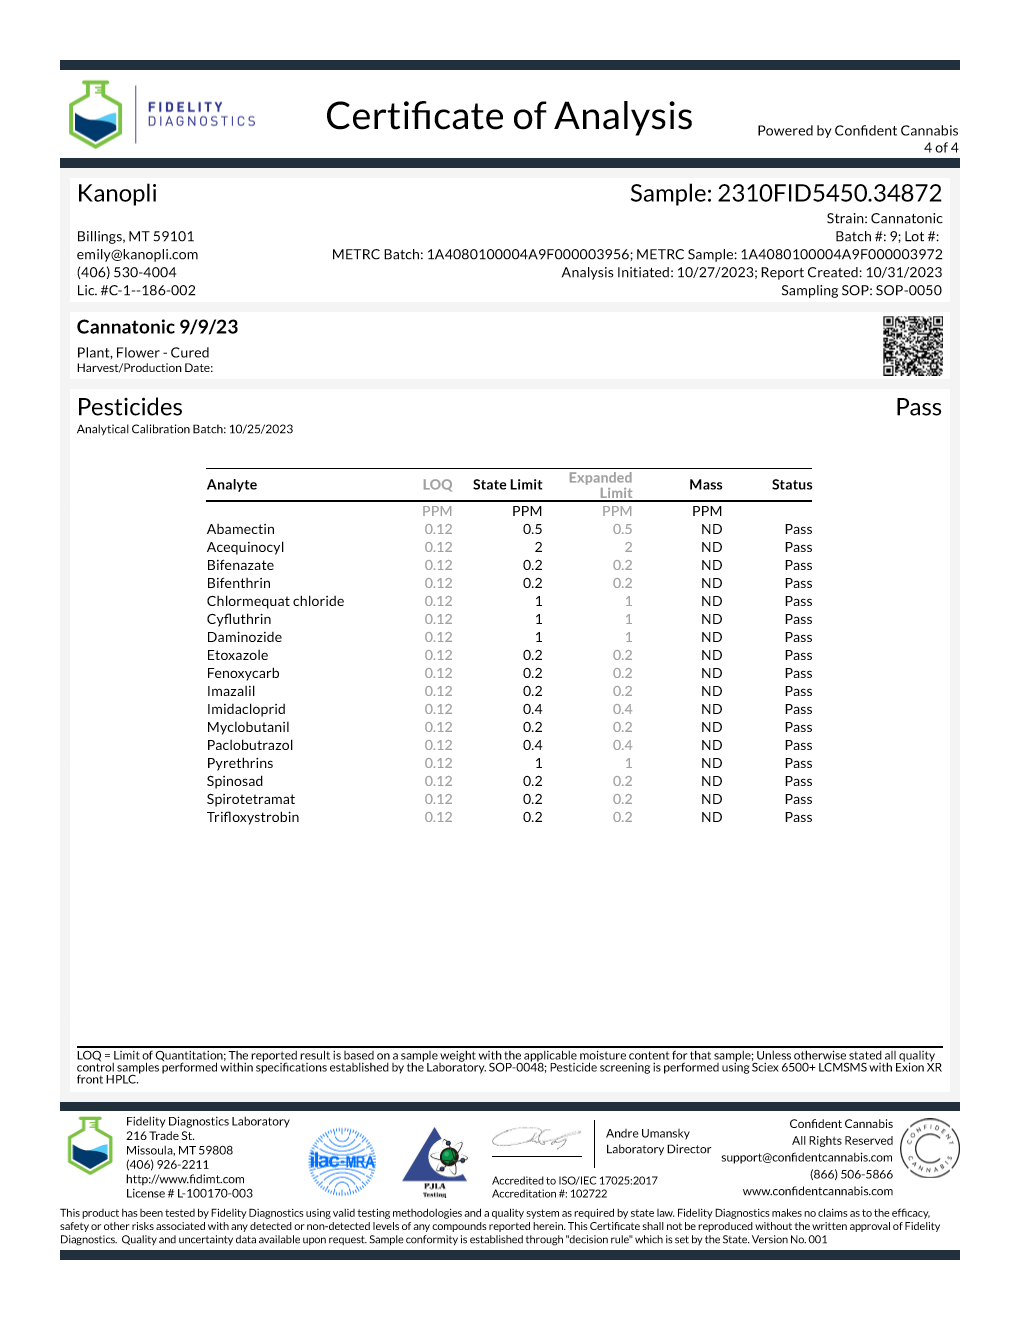 Adult Use - Cannatonic - CBD Dominant 7.19% CBD (Sept. 2023)